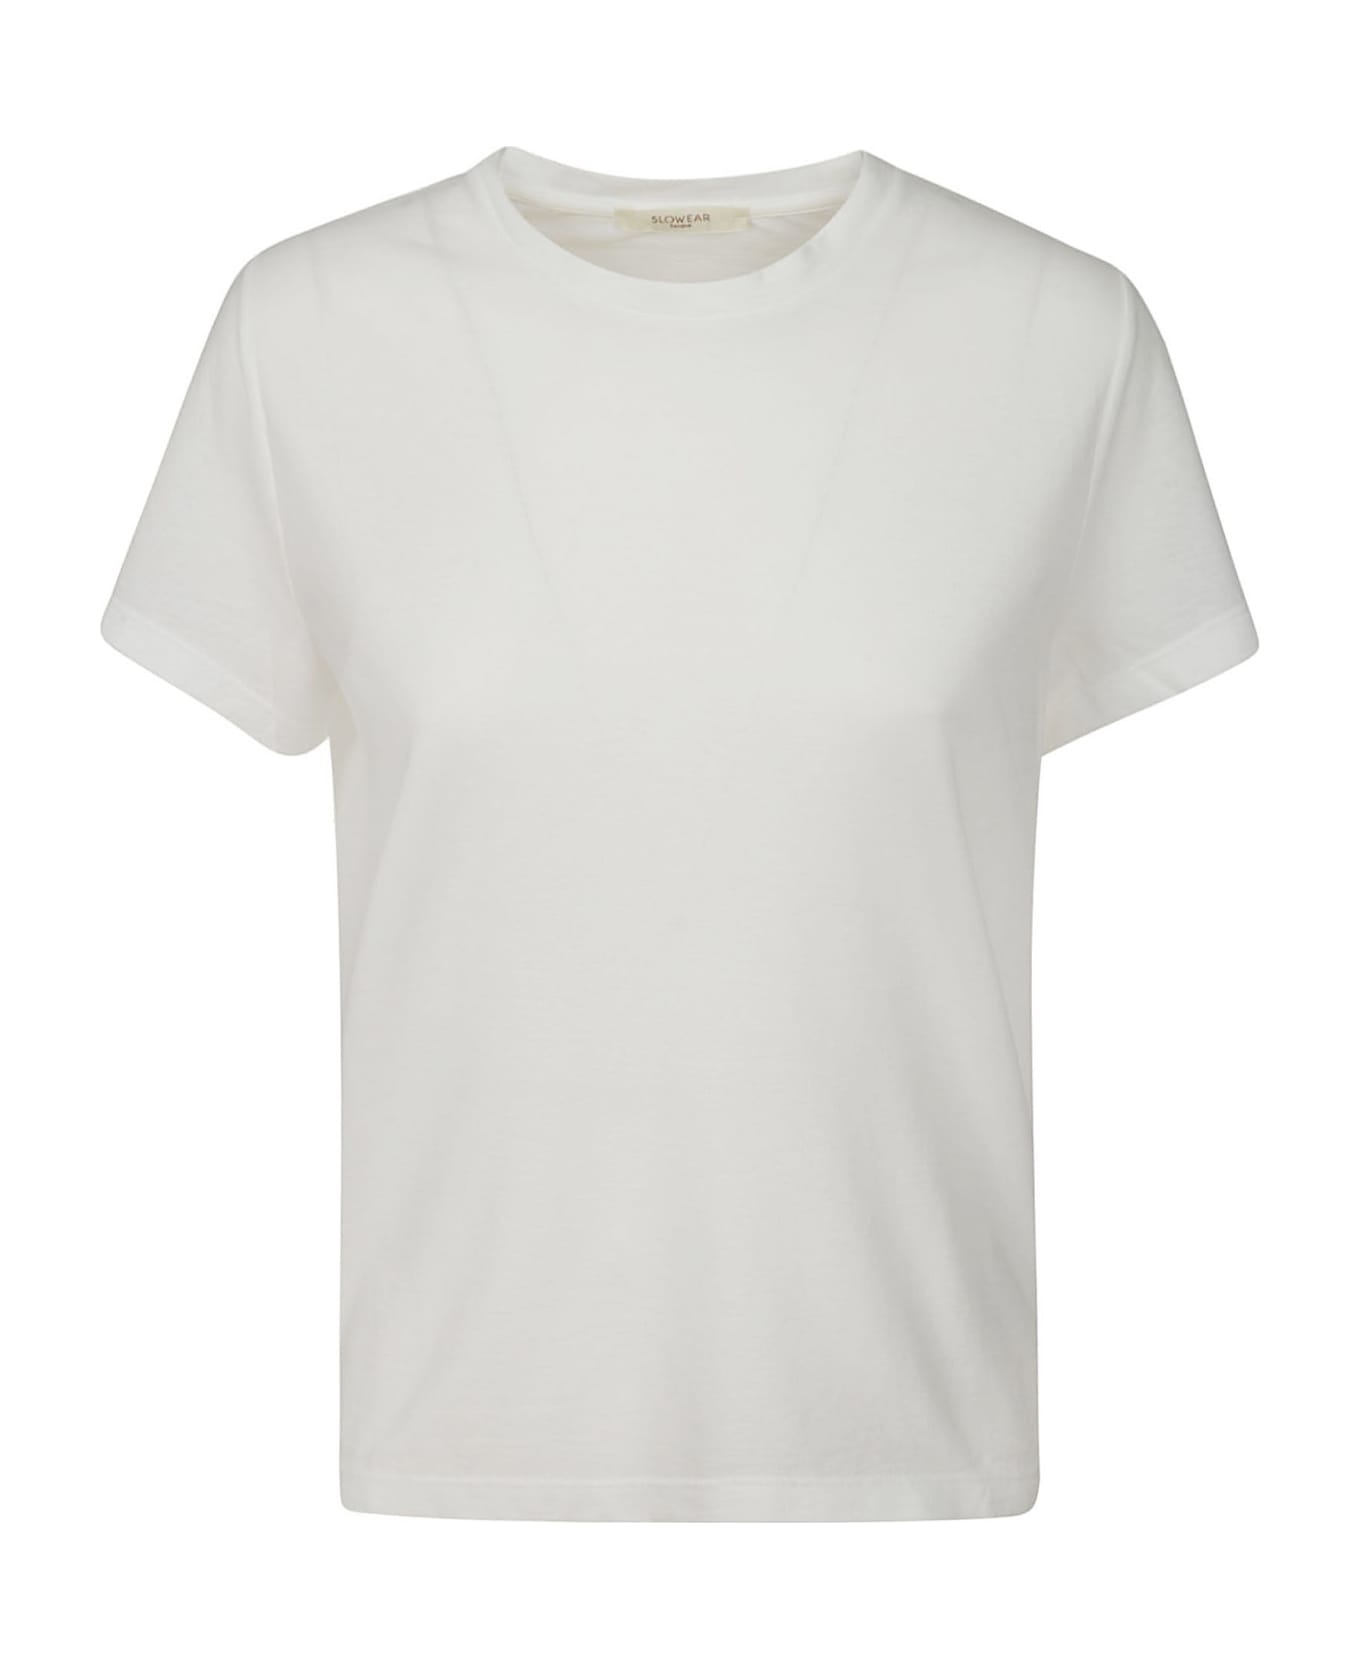 Zanone T-shirt Ss - White